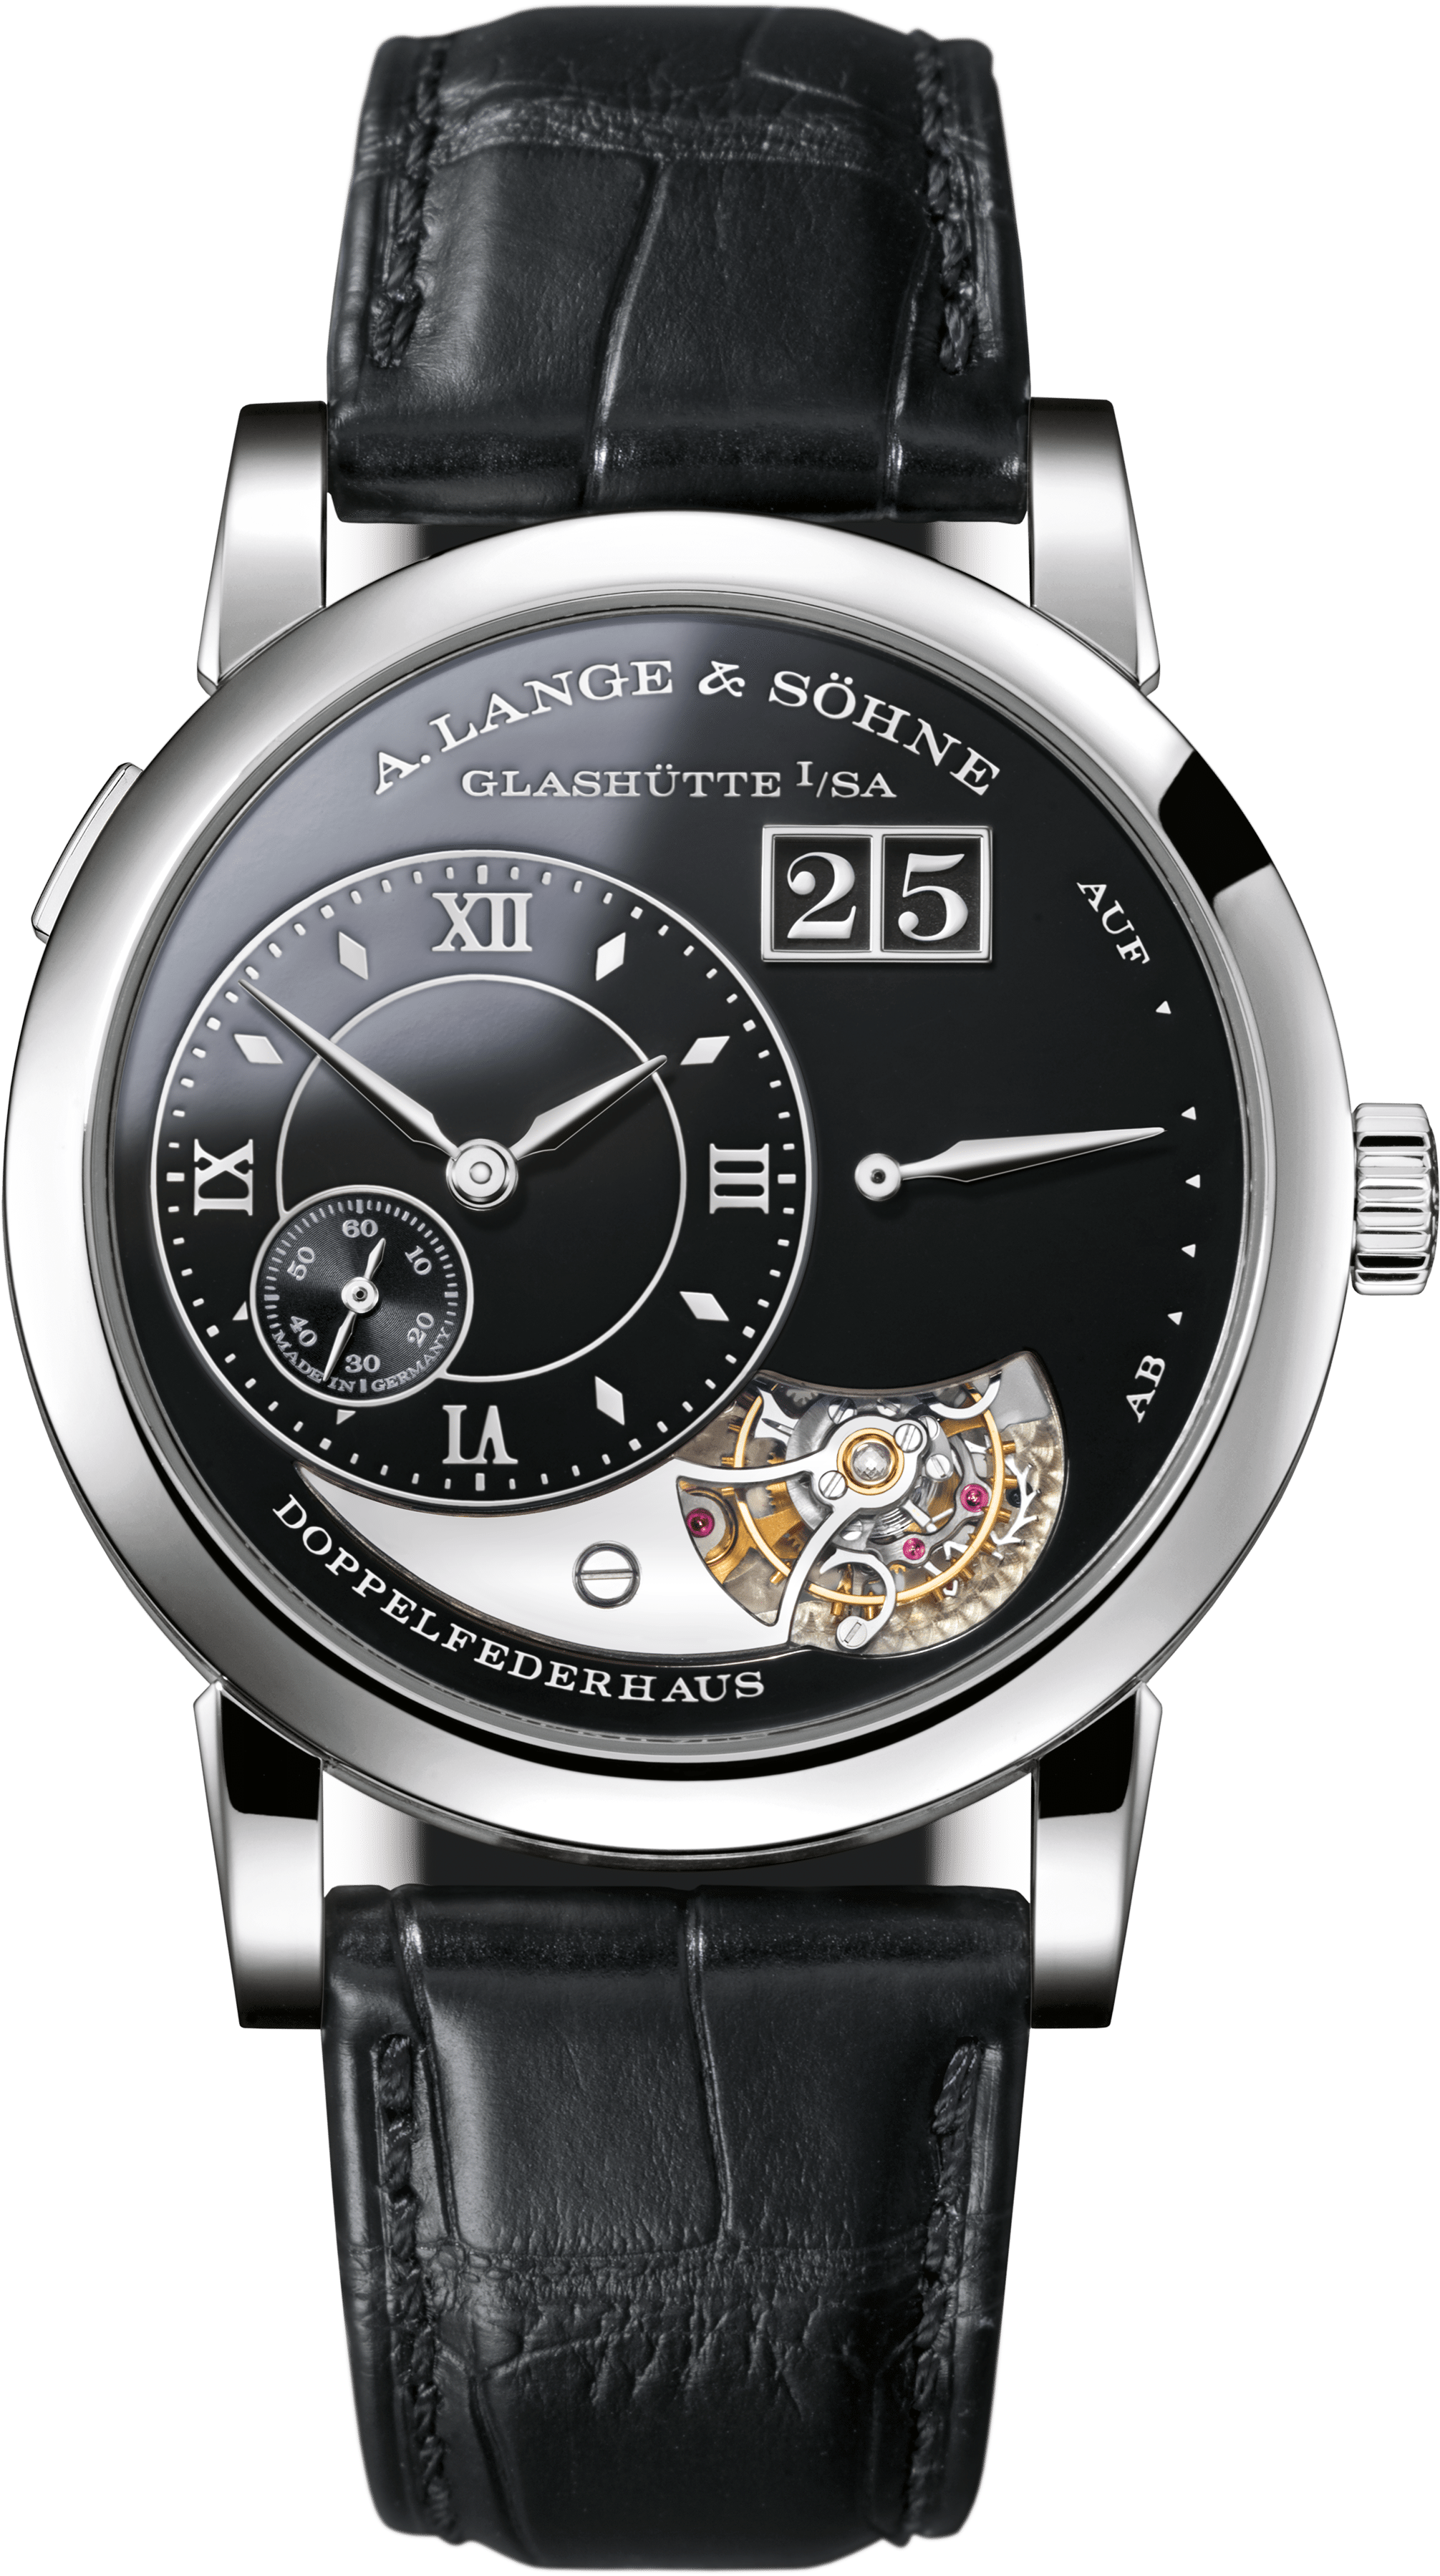 Buying Replica Watches Online